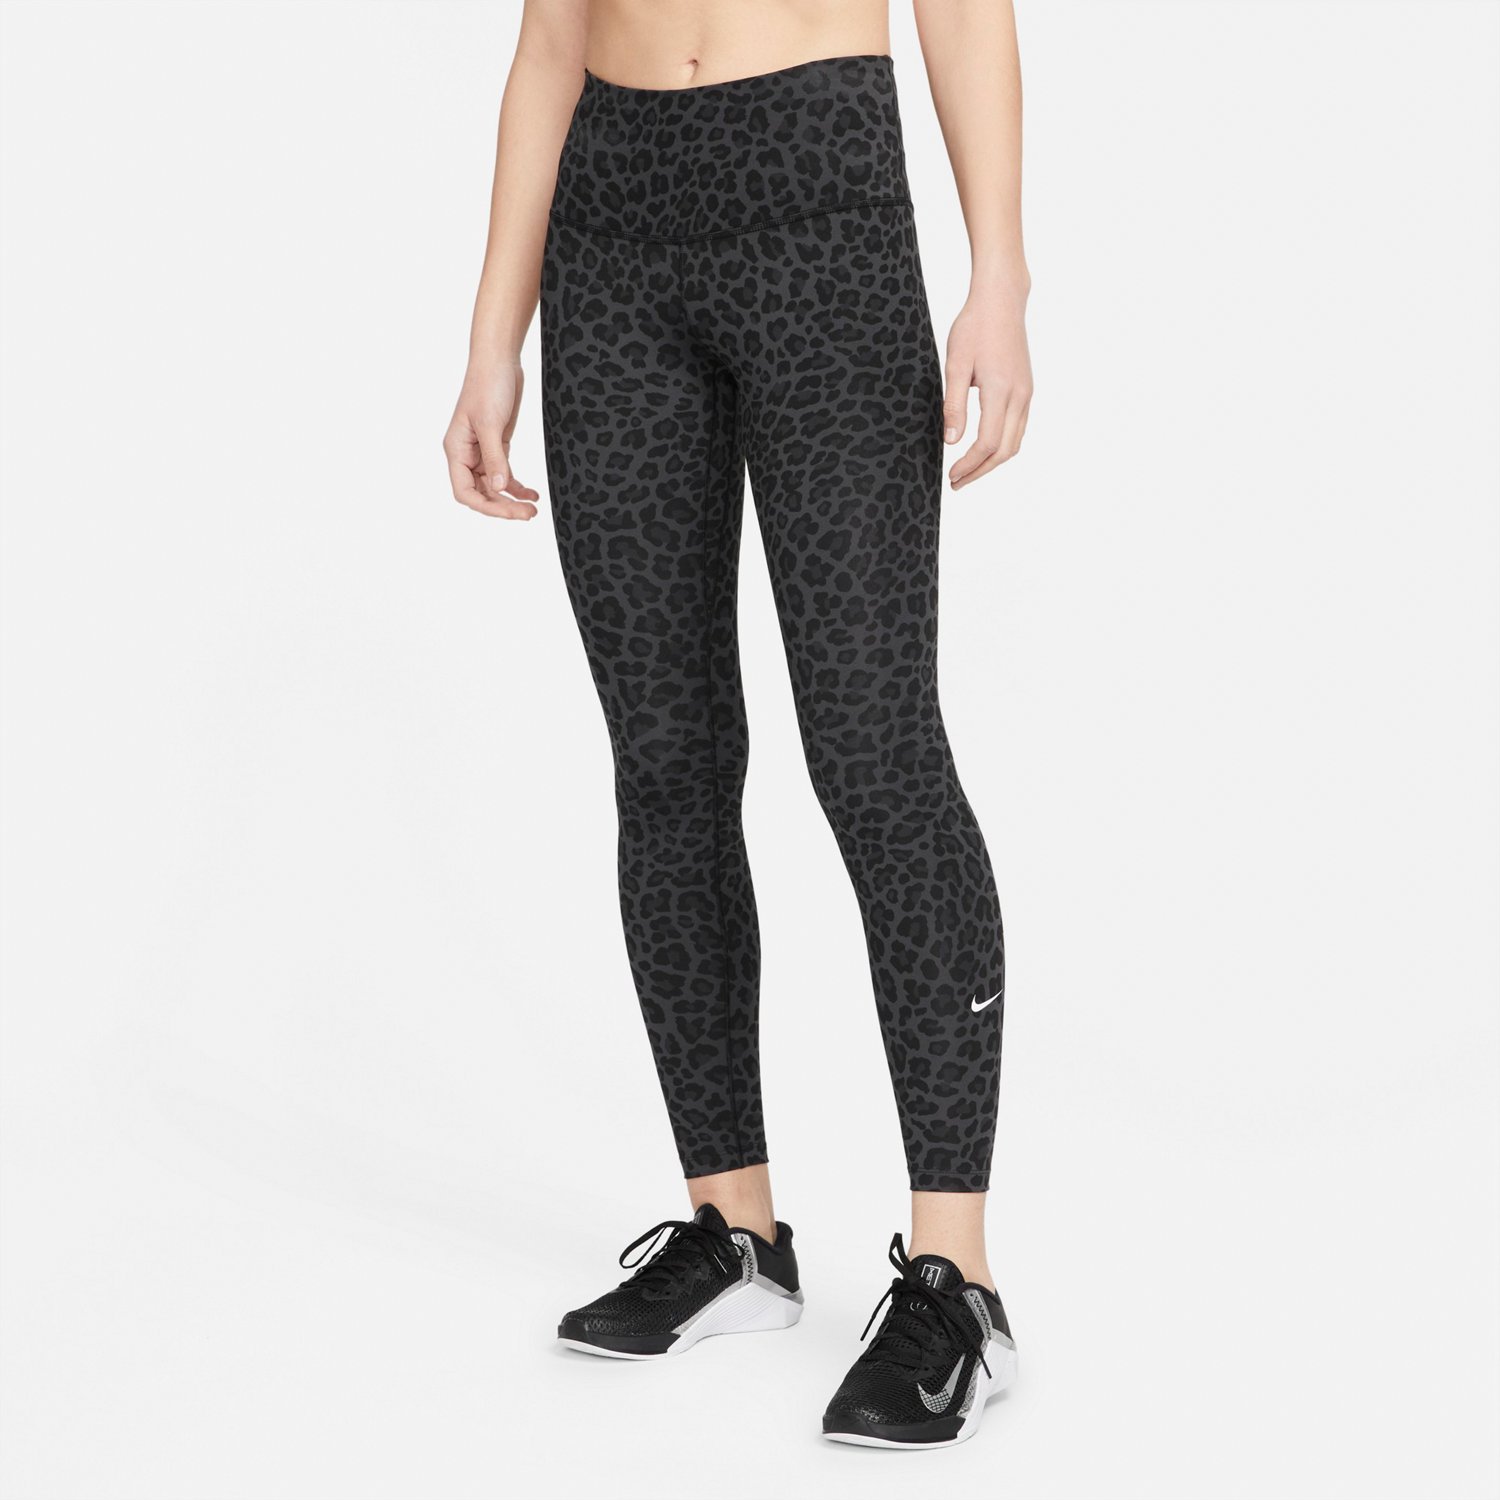 leopard print leggings, Nike